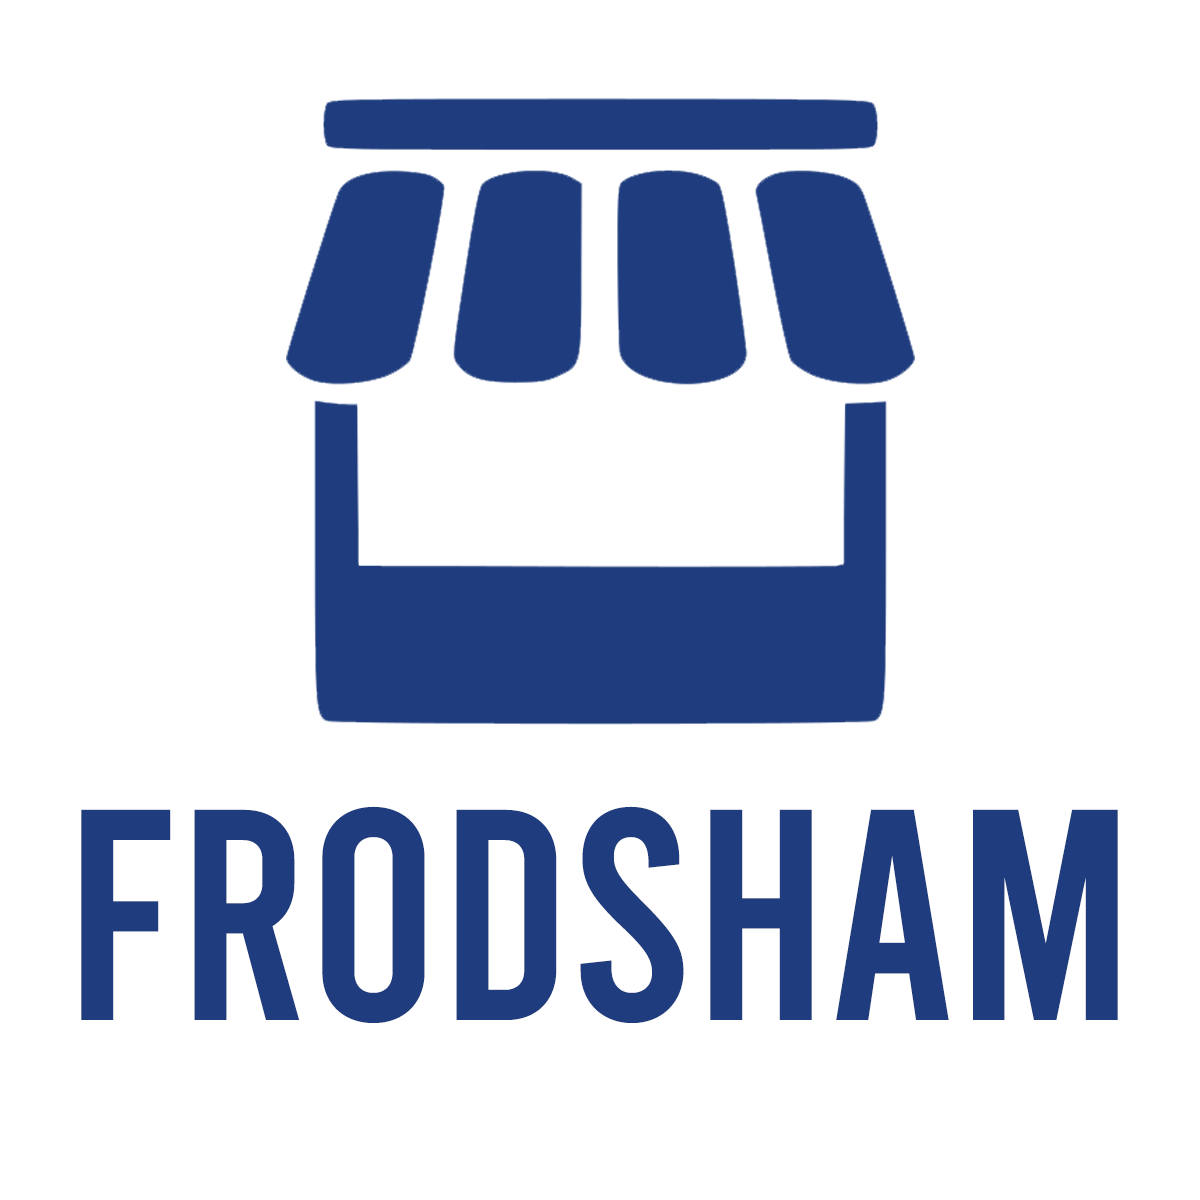 Frodsham Market